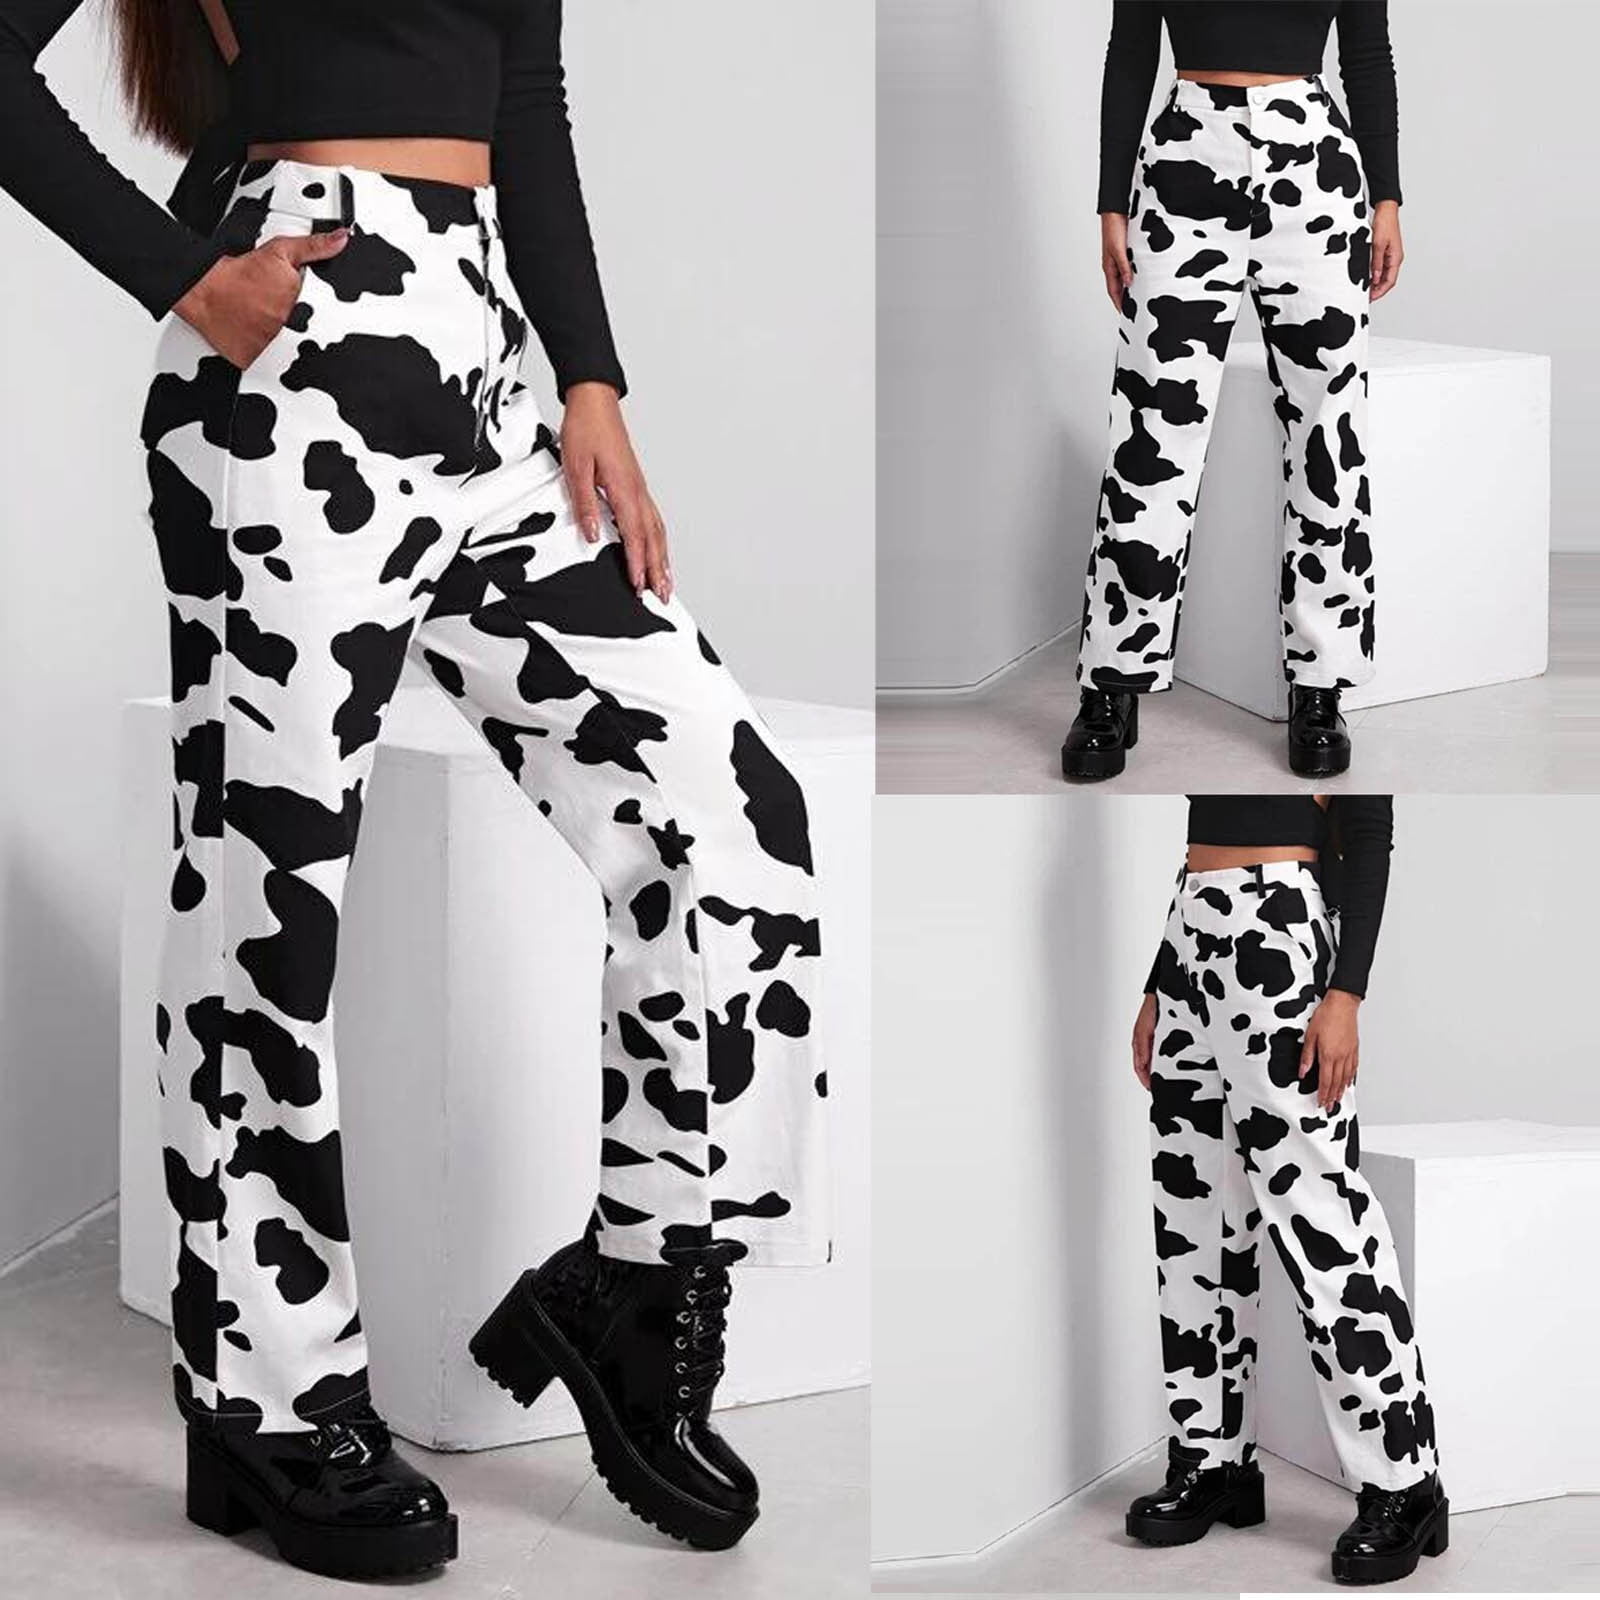 Plus Size Cow Print High Rise Pants - Black White – Dolls Kill